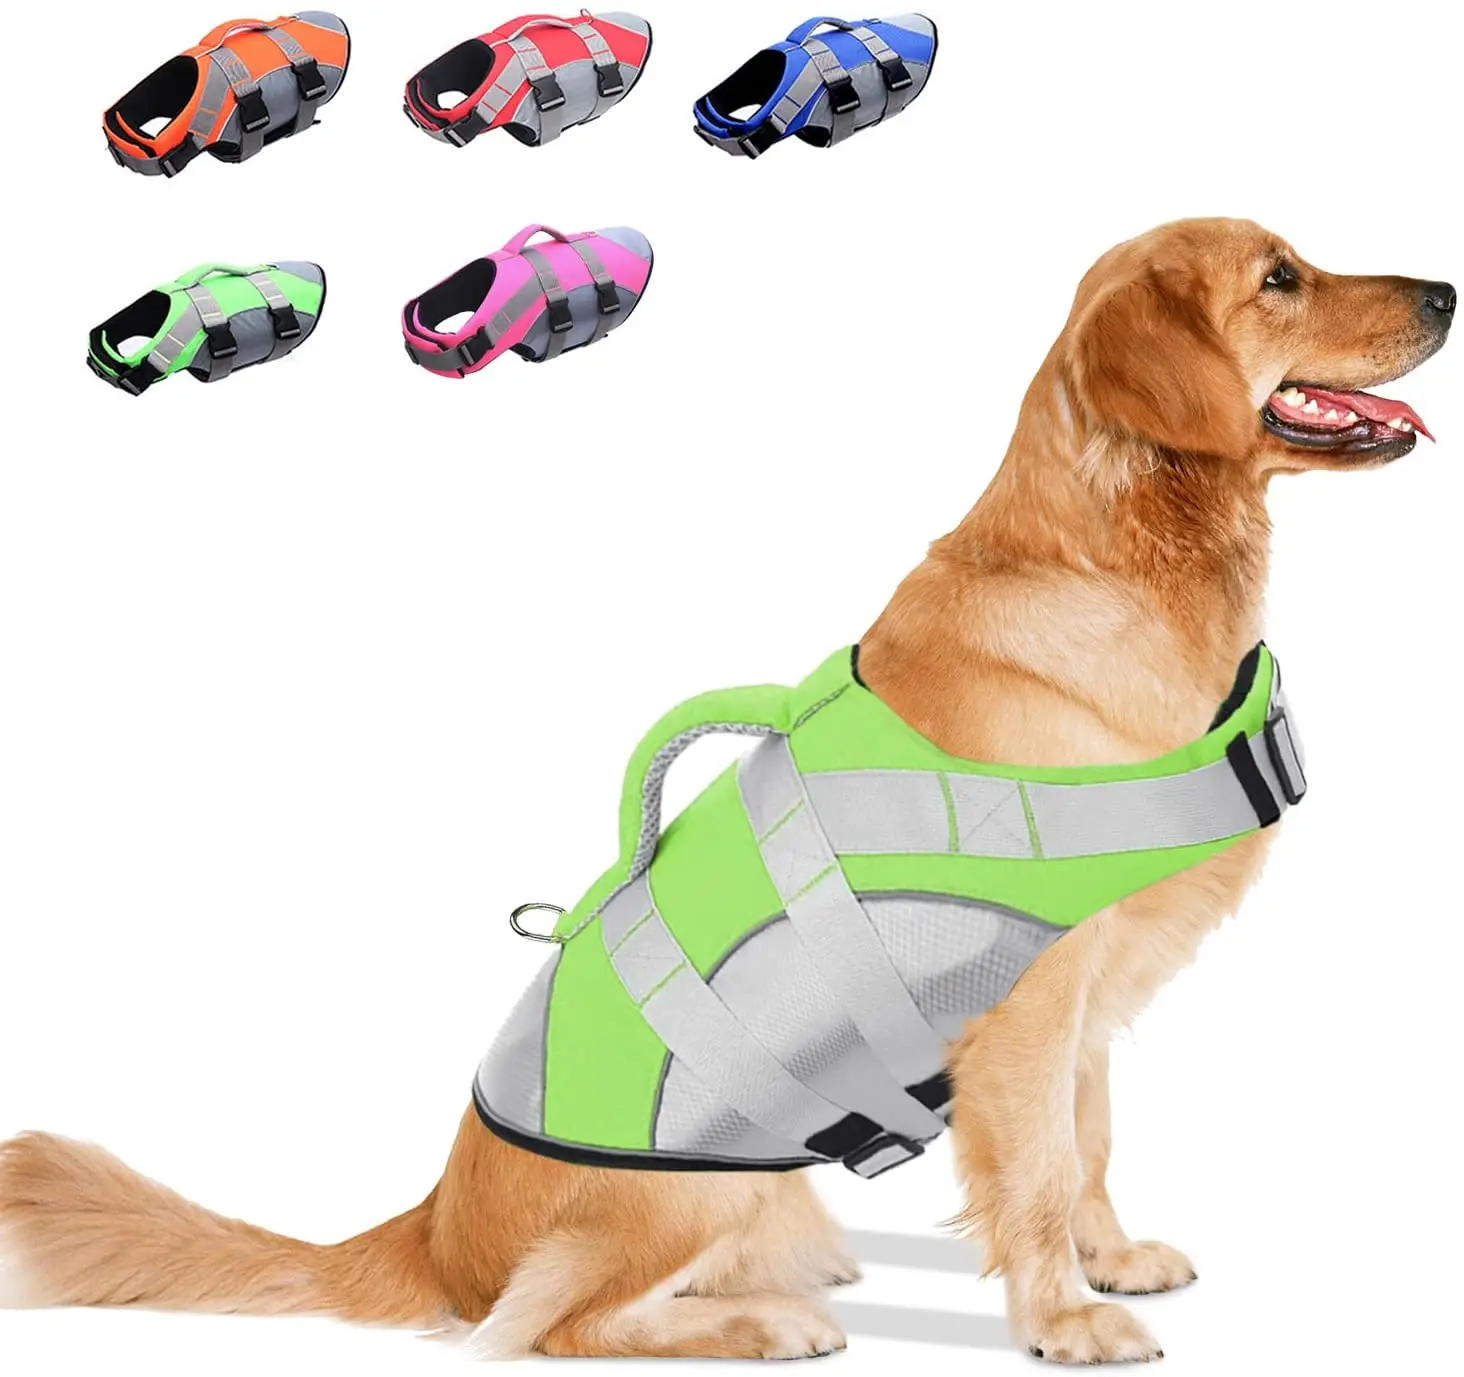 

Eyson Wholesale Pet Clothes Safety with Reflective Stripes Dog life Vest, Red,blue,orange, green,pink